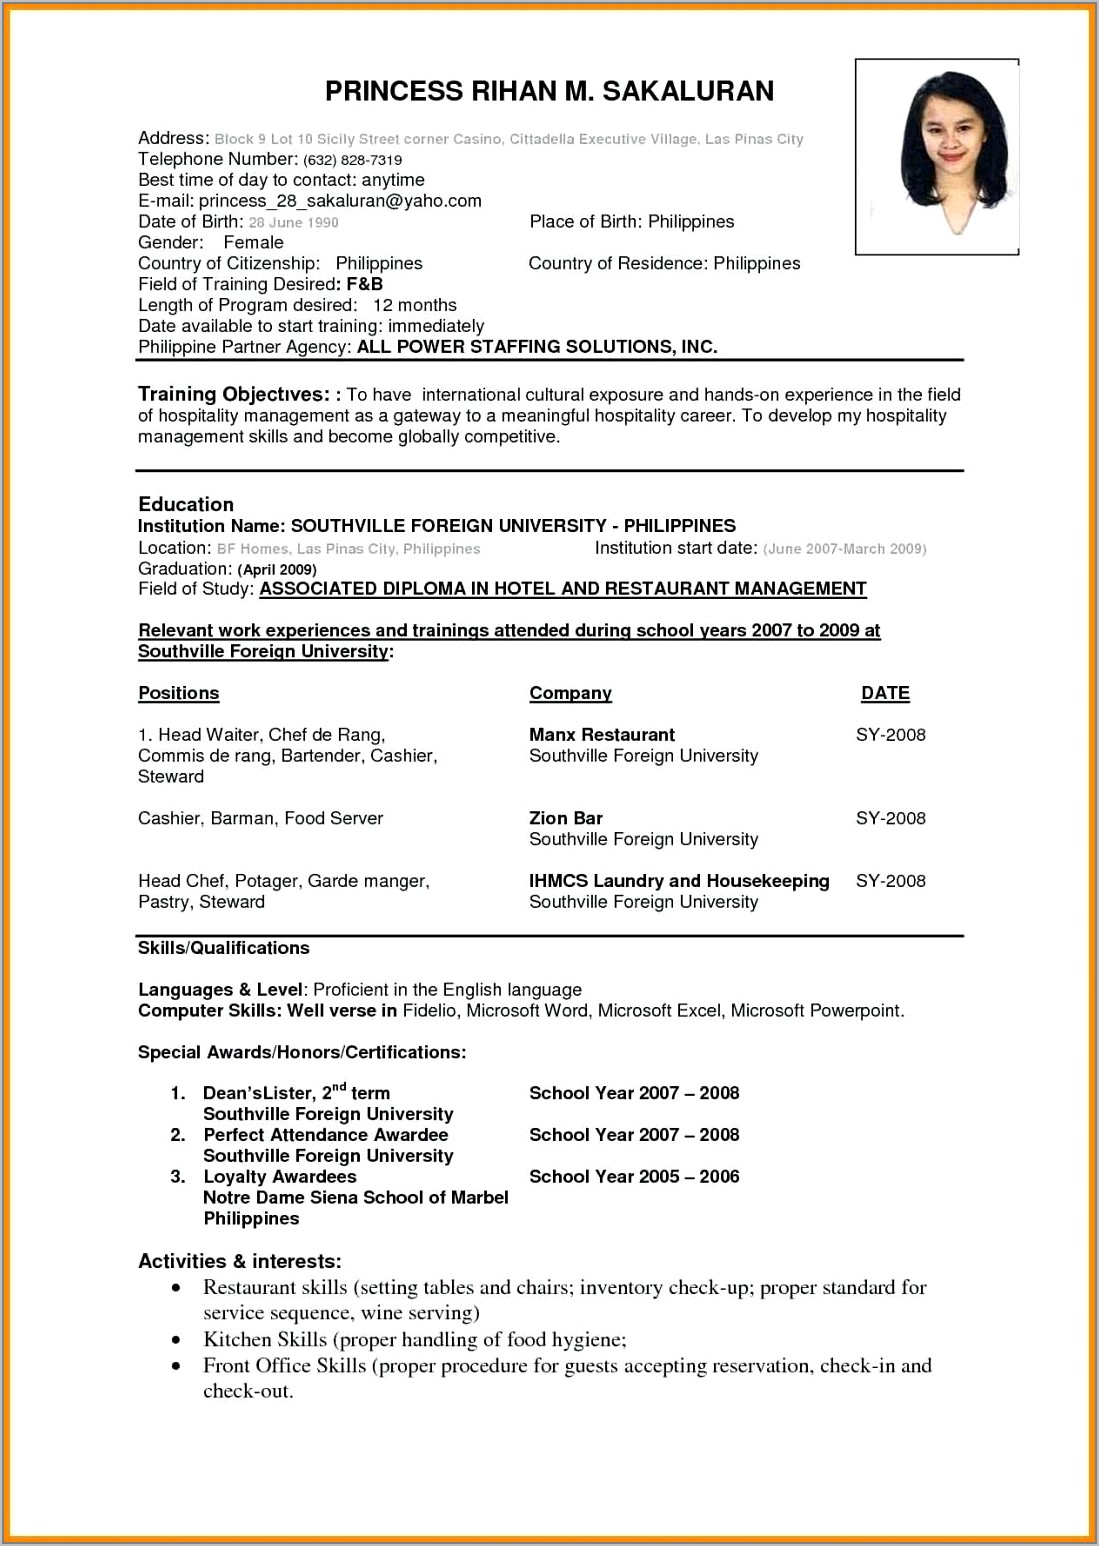 Resume Format For Nurses In India